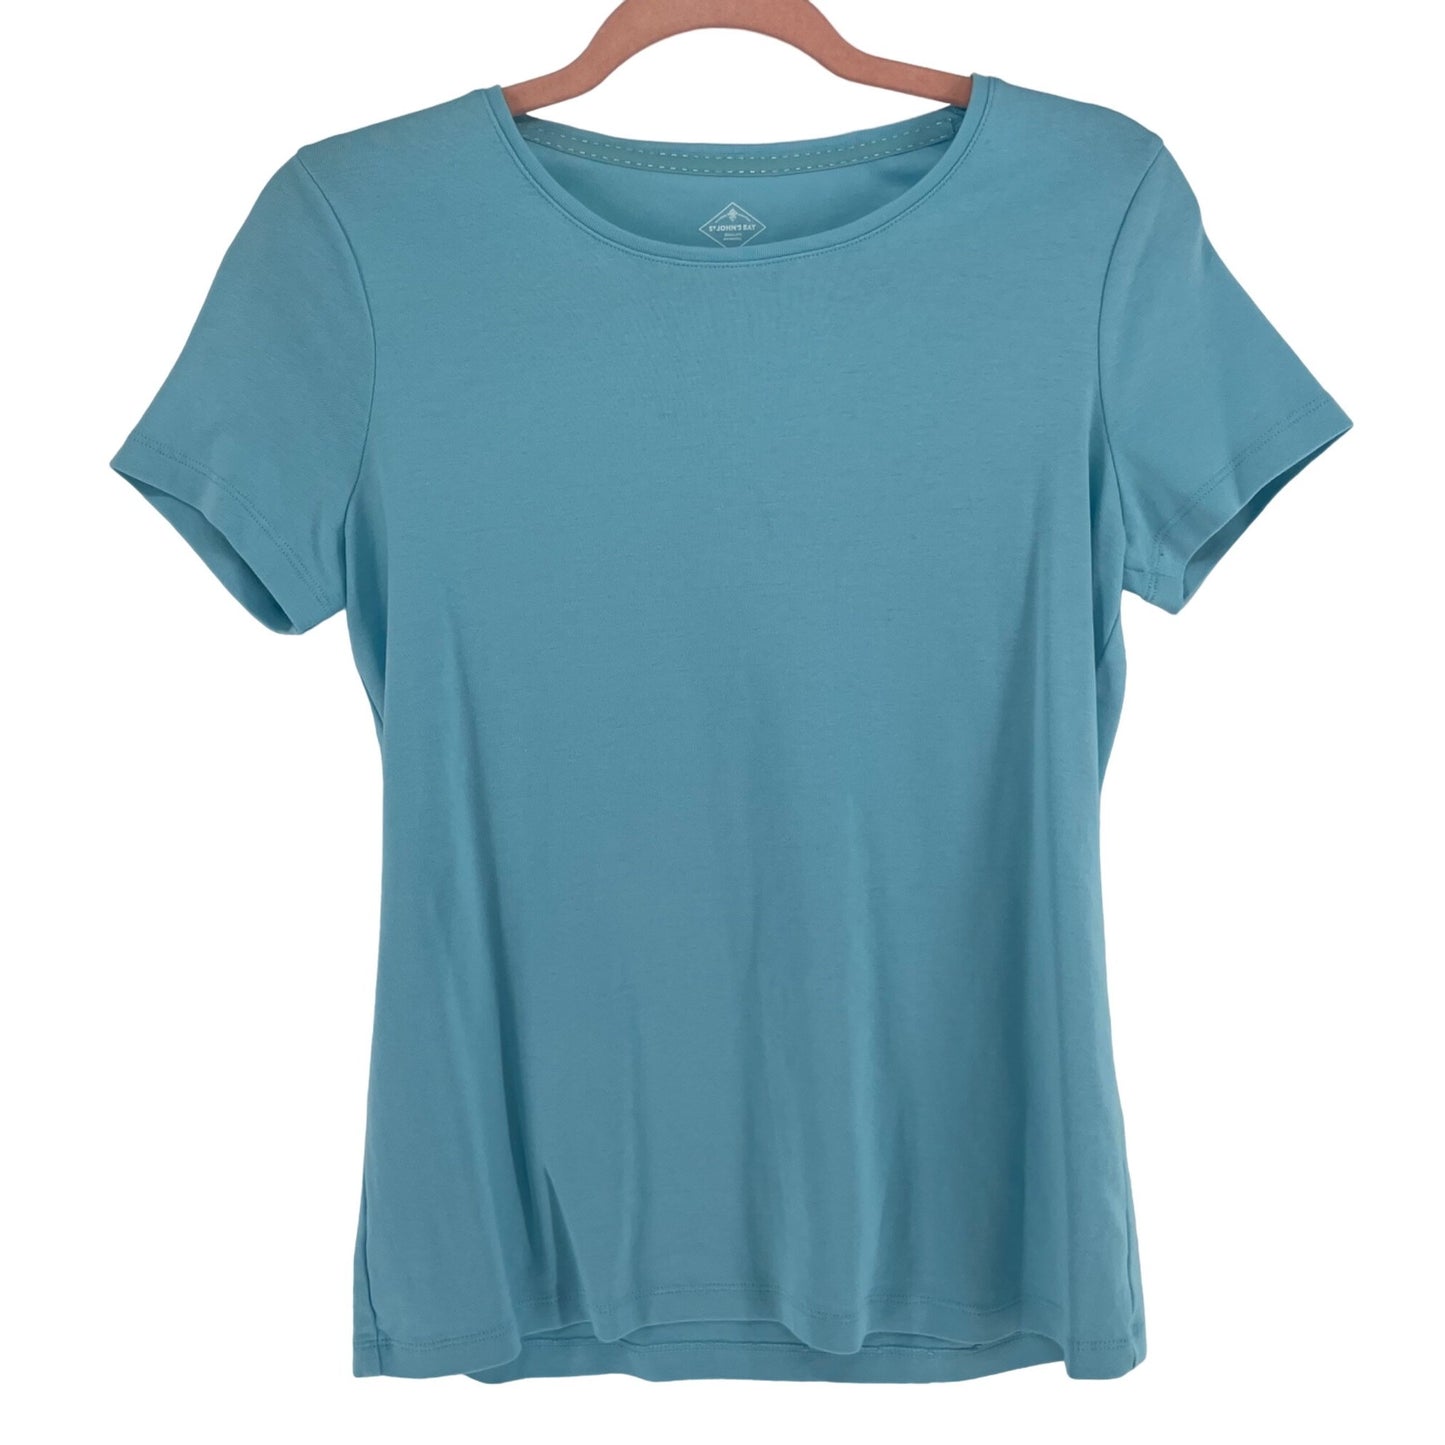 St. John's Bay Women's Size Medium Aqua Blue Crew Neck T-Shirt